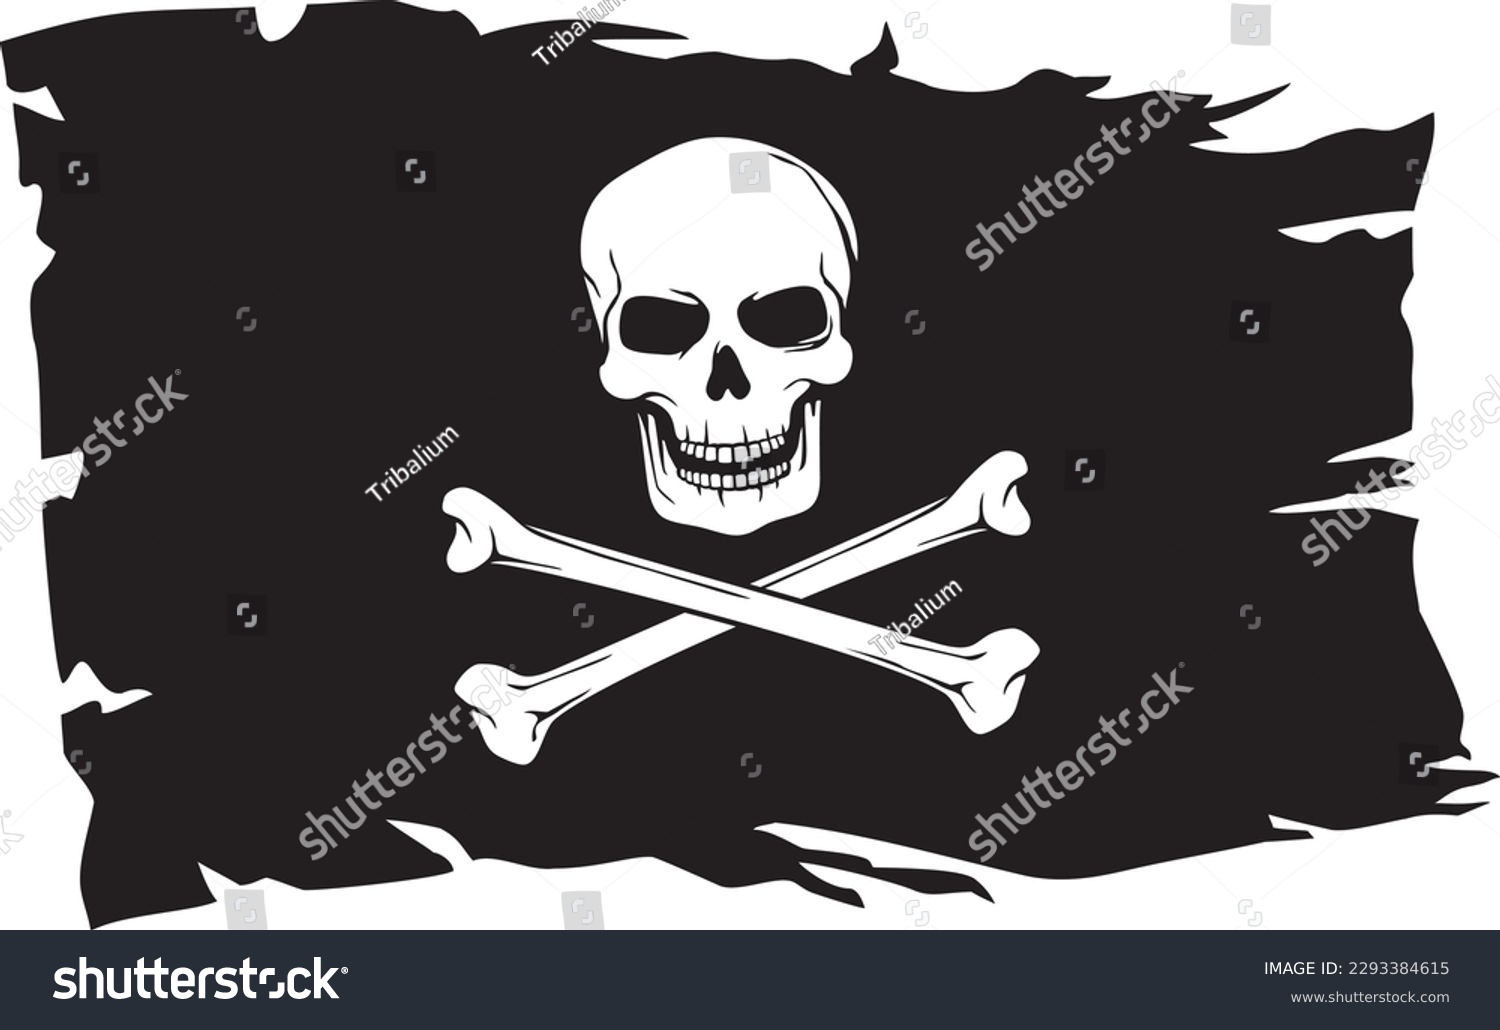 Pirate flag with skull and cross bones (Jolly Roger). Vector illustration. #2293384615